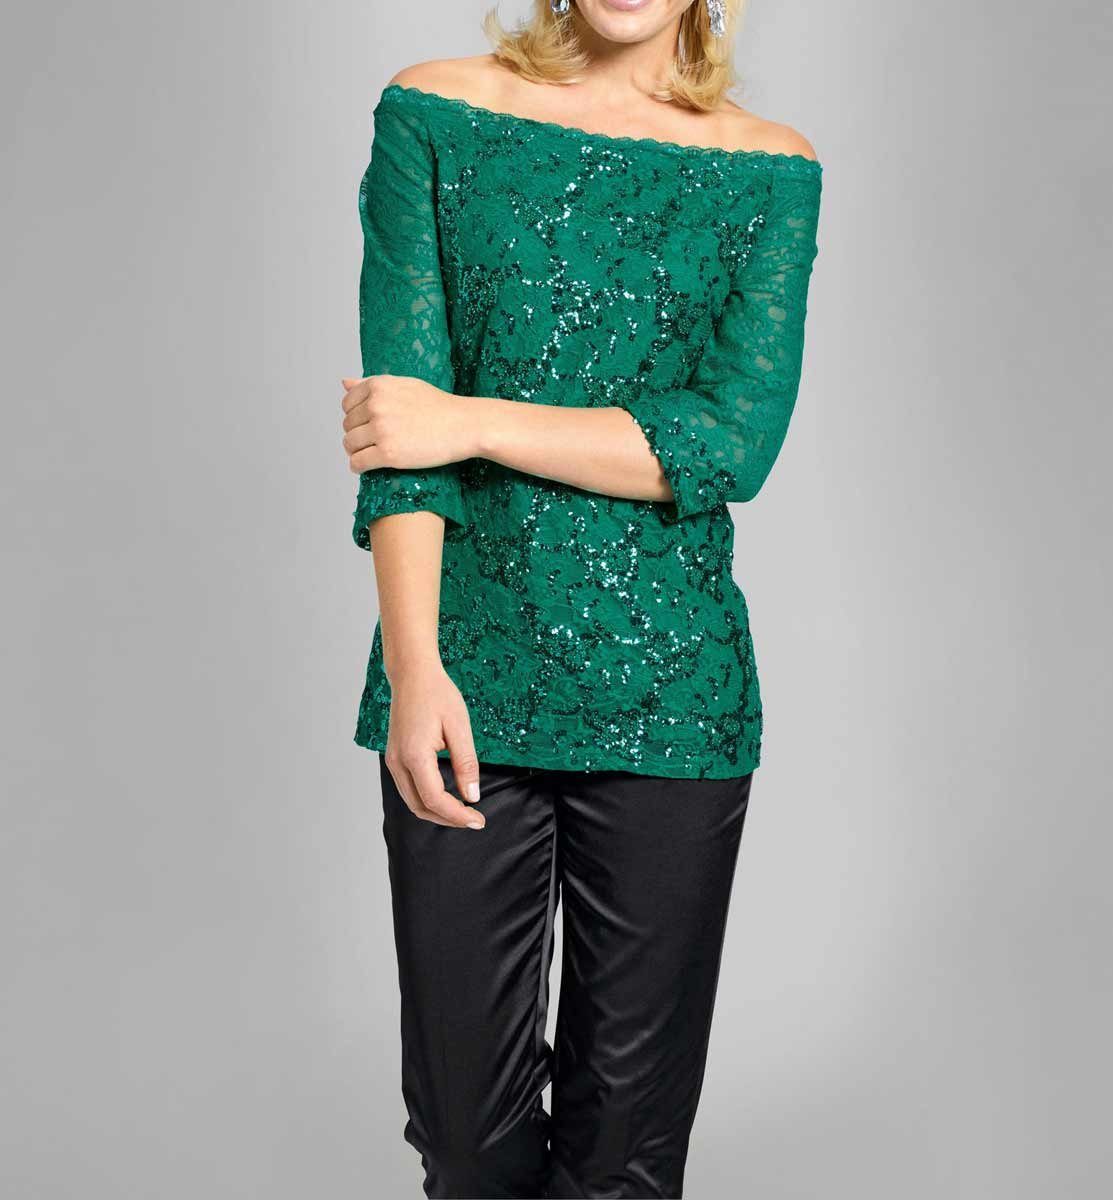 Designer-Spitzenshirt grün Ashley BROOKE by ASHLEY Damen heine m. Brooke Pailletten, Spitzenshirt